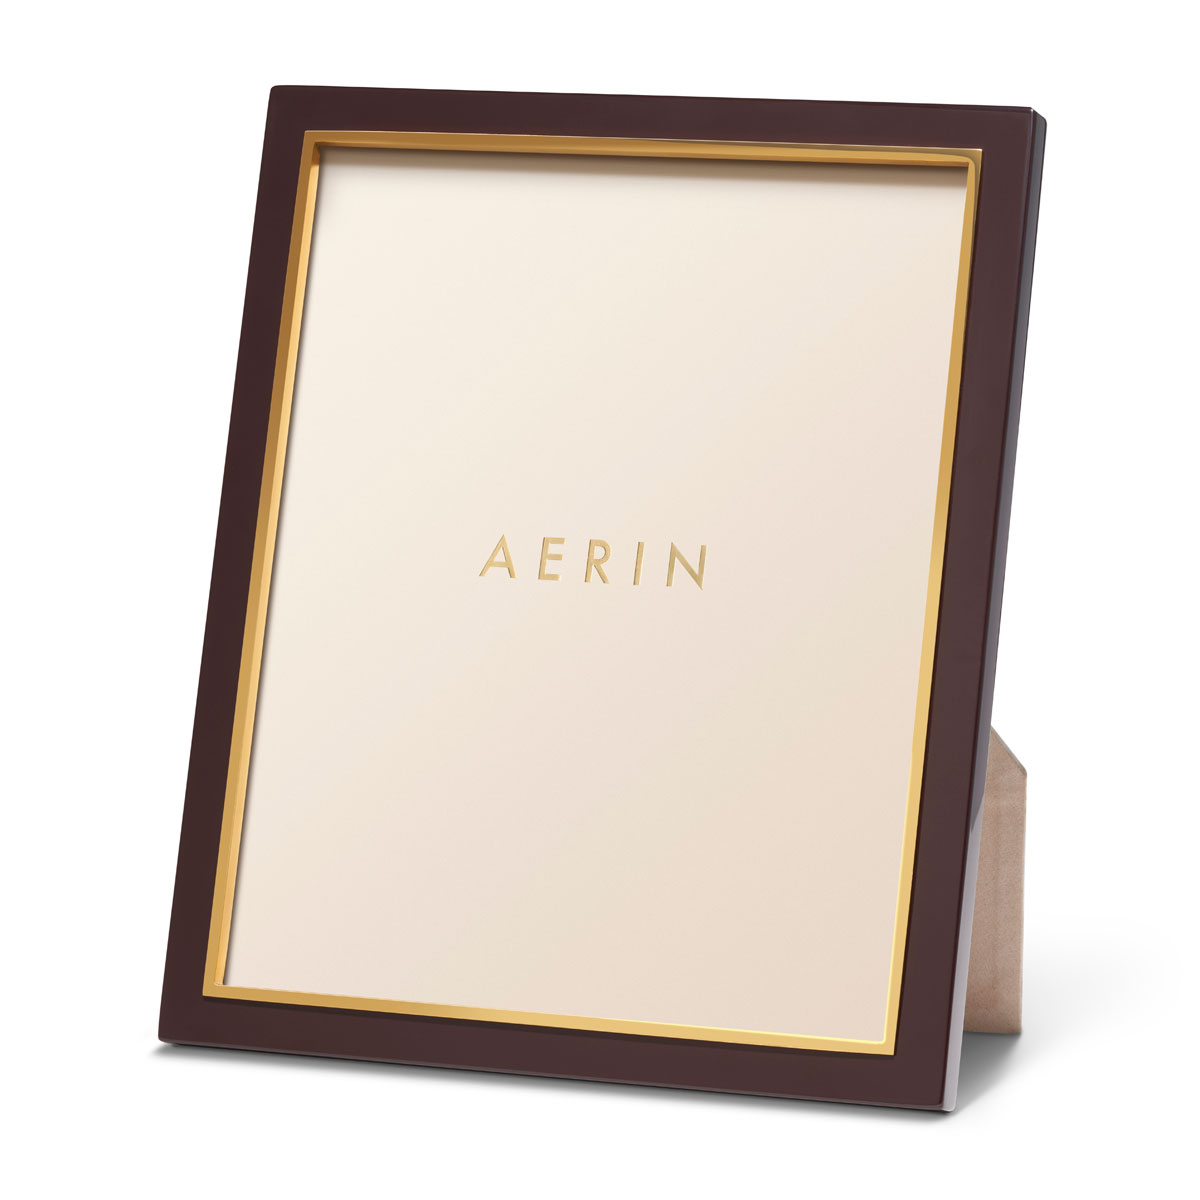 Aerin Varda Lacquer Frame, 8 x 10", Chocolate